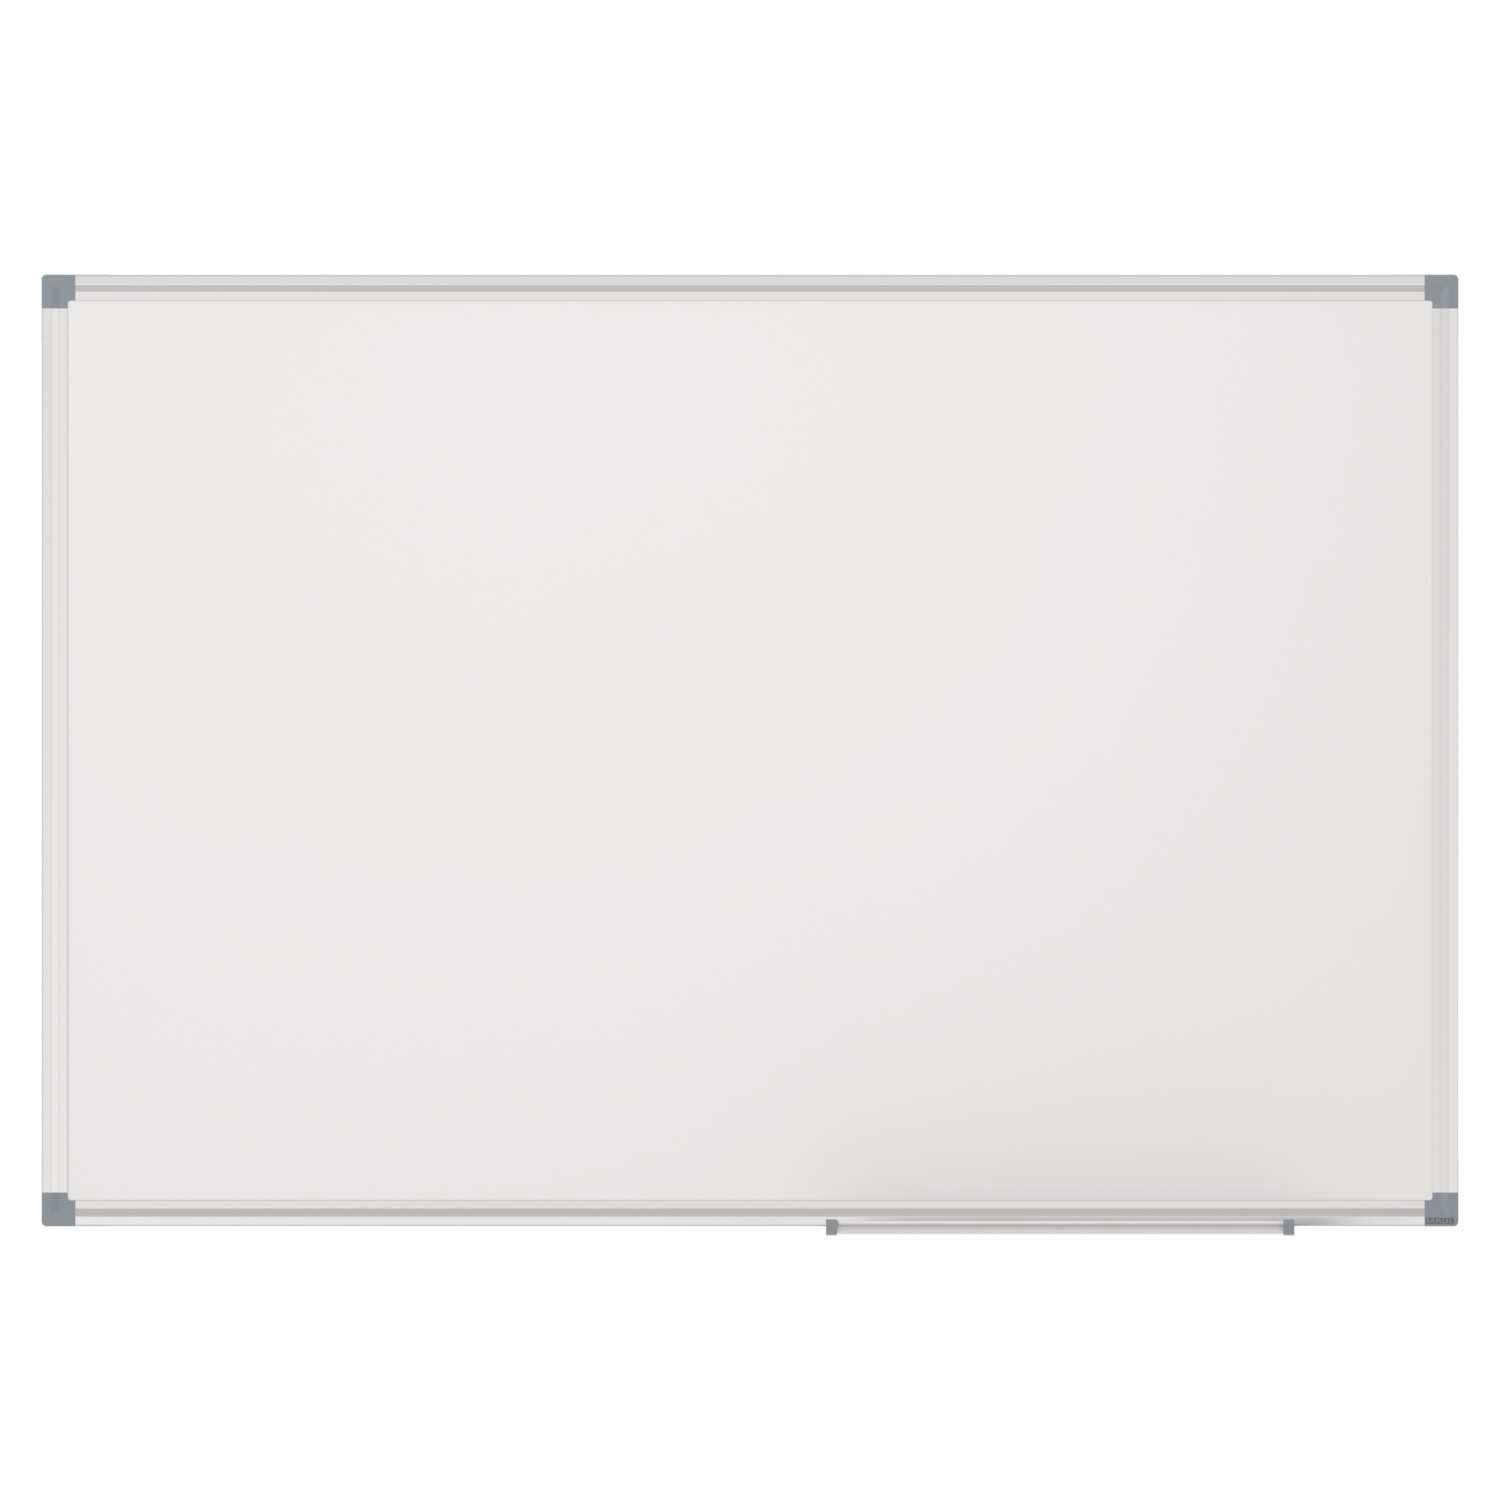 Whiteboard MAULstandard, 120x240 cm